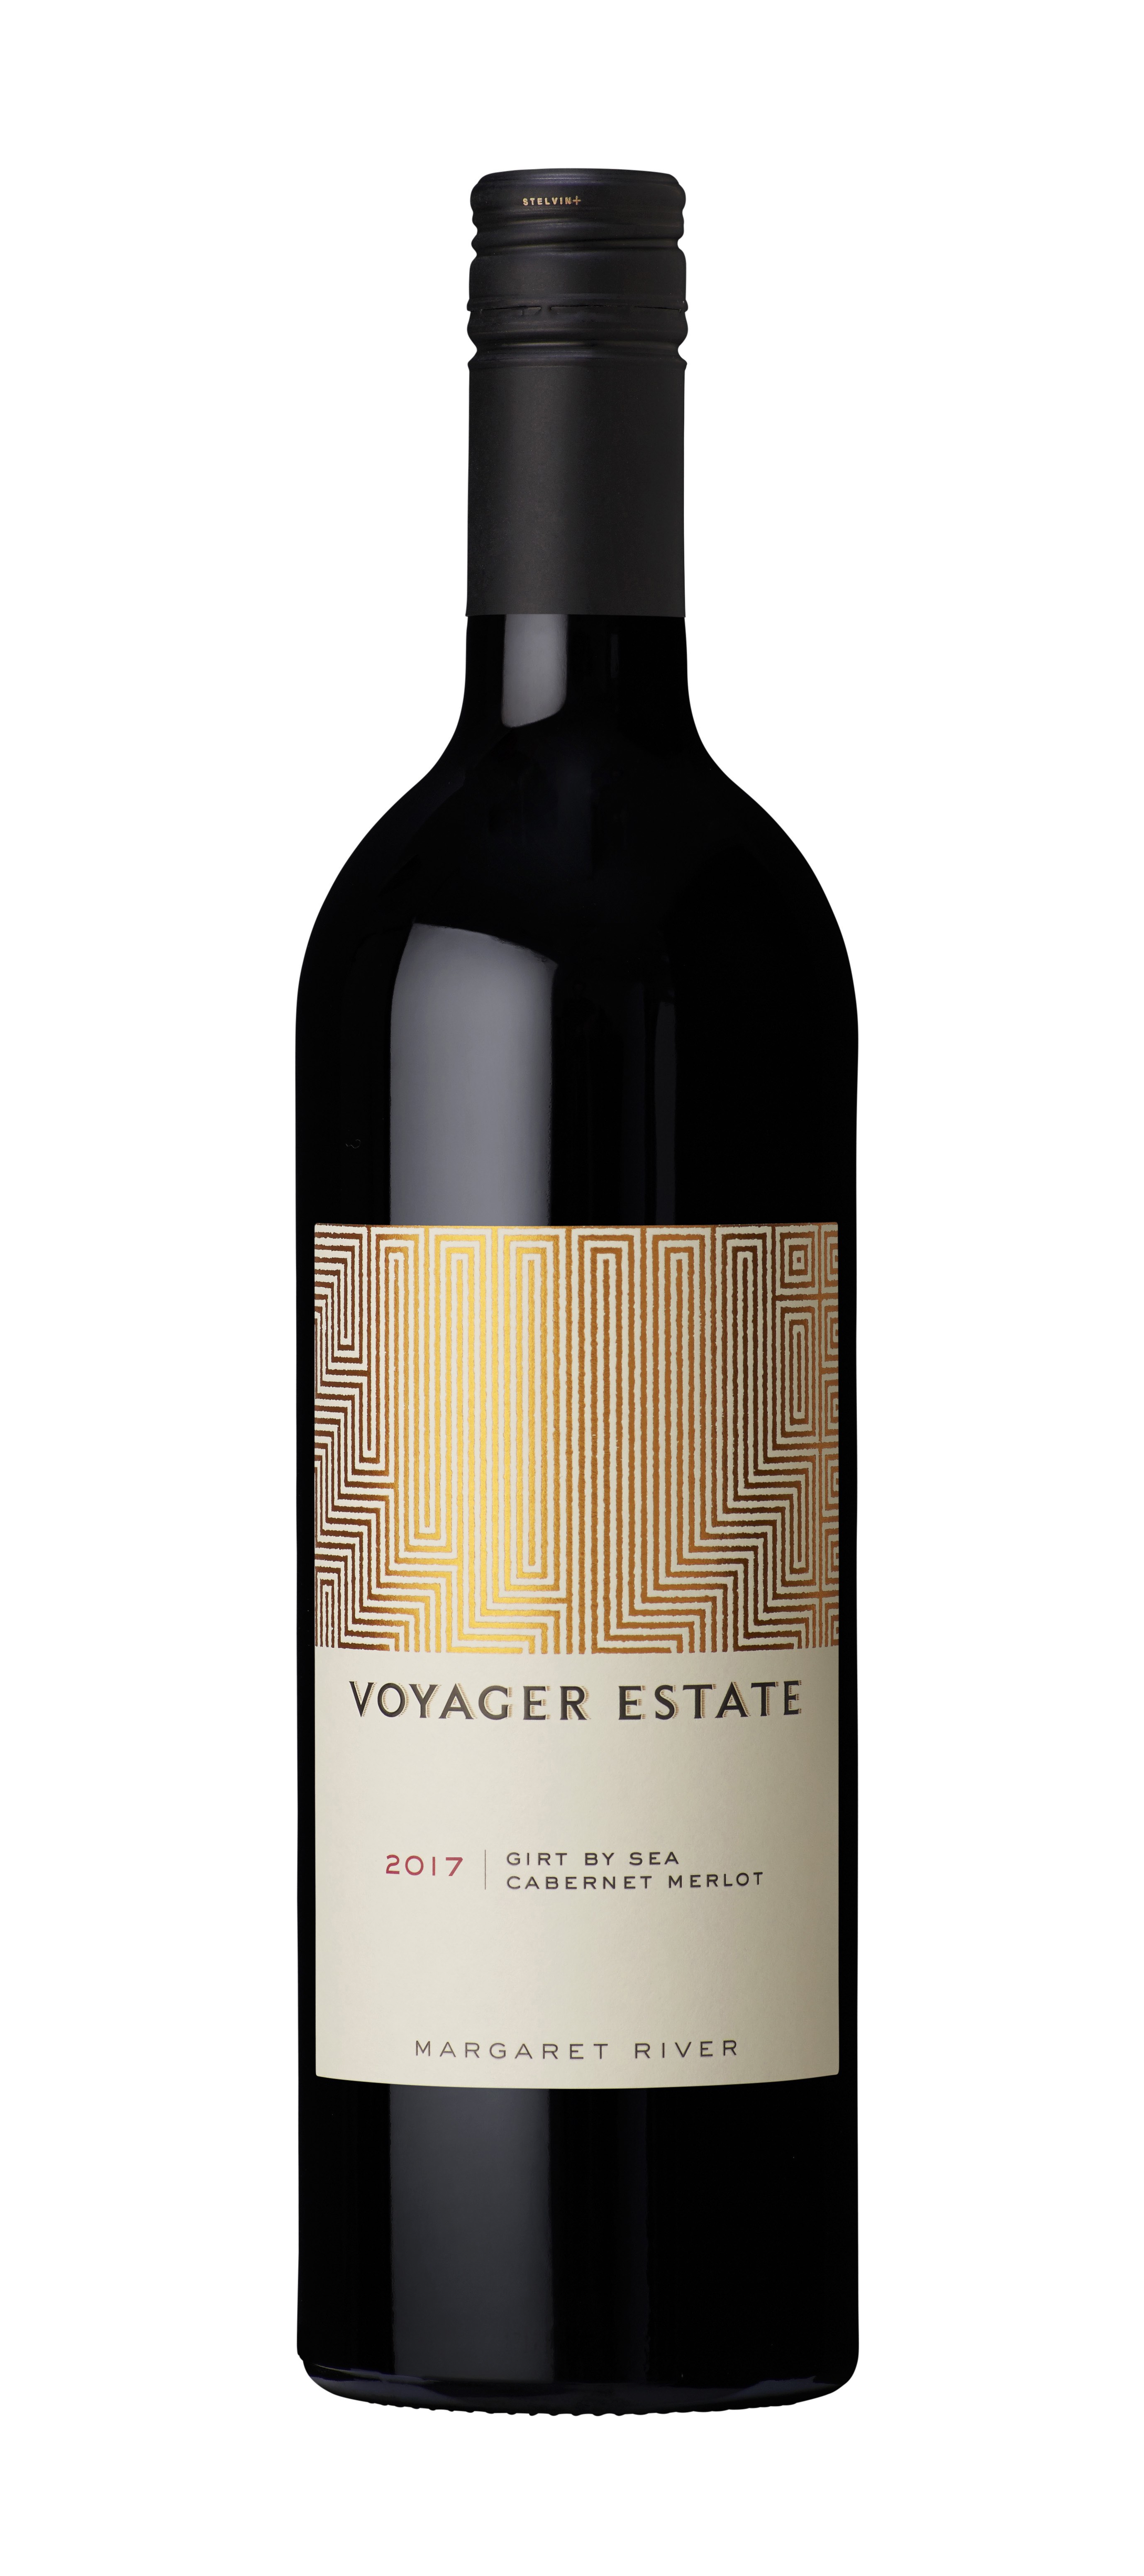 Estate Goblet Voyager Cabernet Wine Merlot - 2020 Sea by Girt